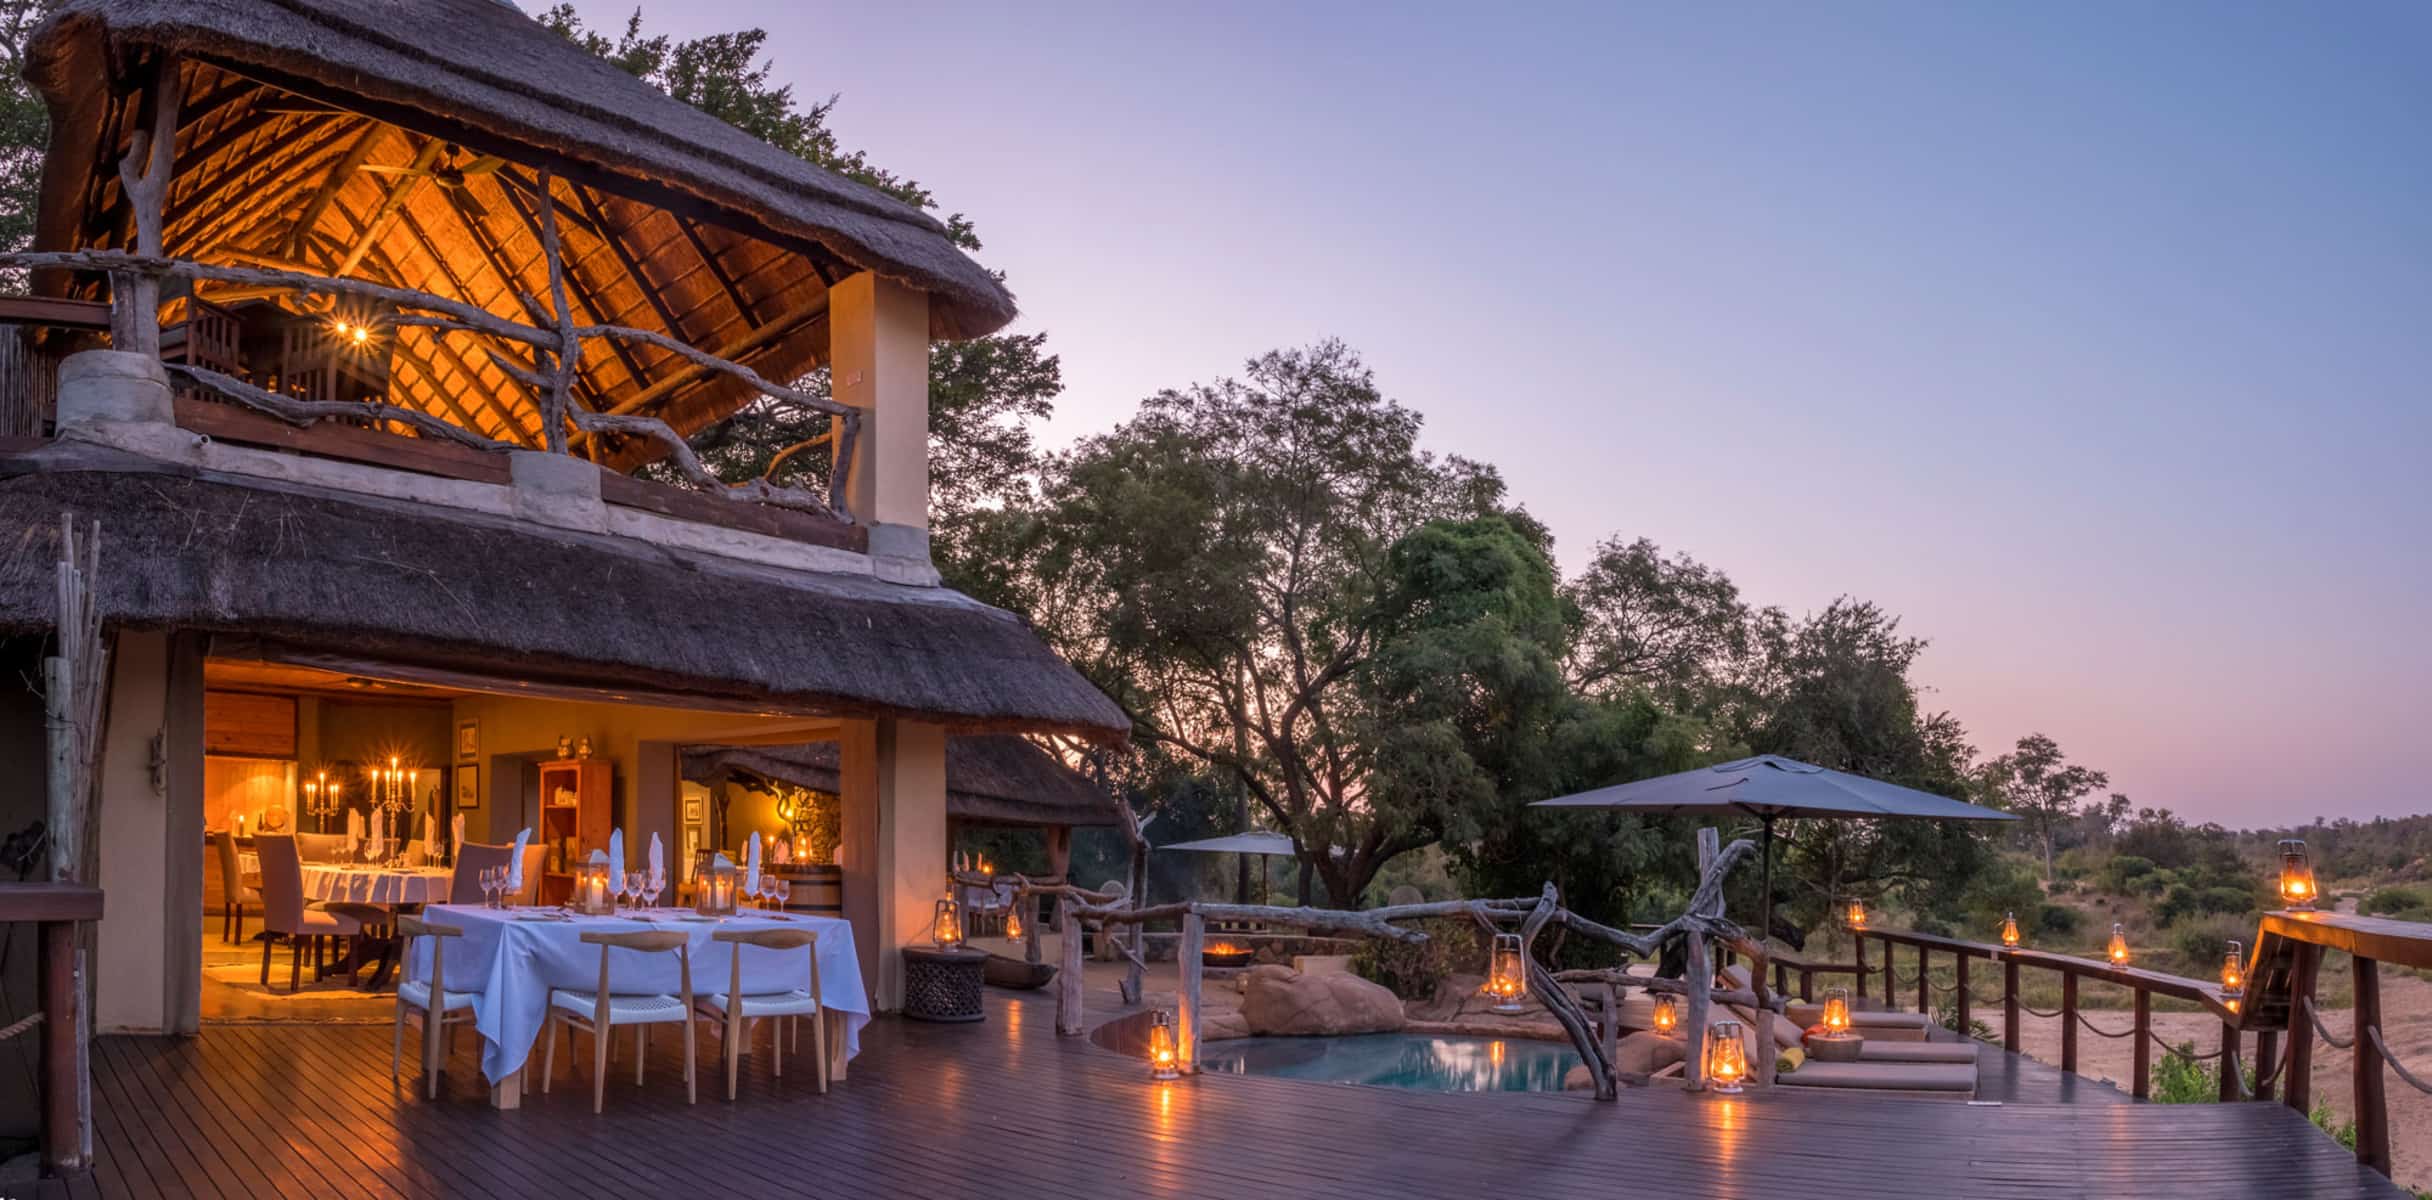 Safari-lodge-night-scenic